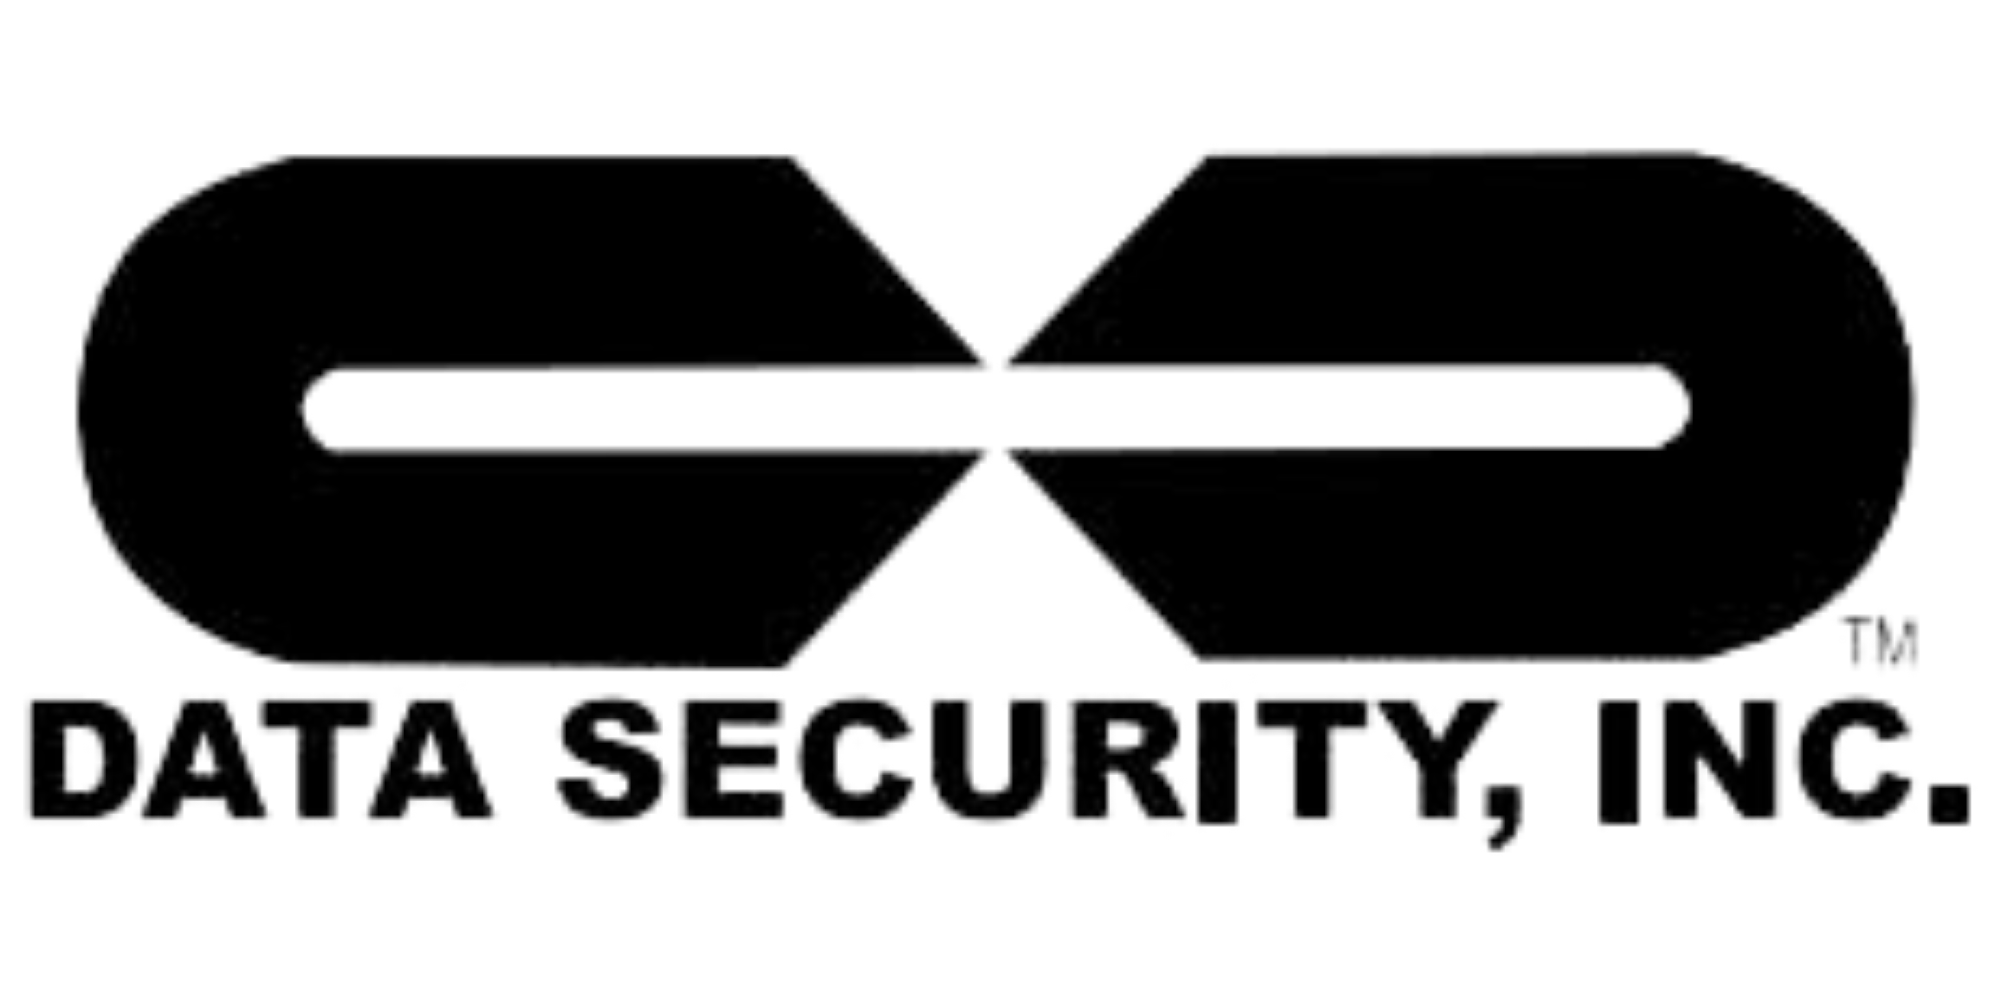 Data Security, Inc.